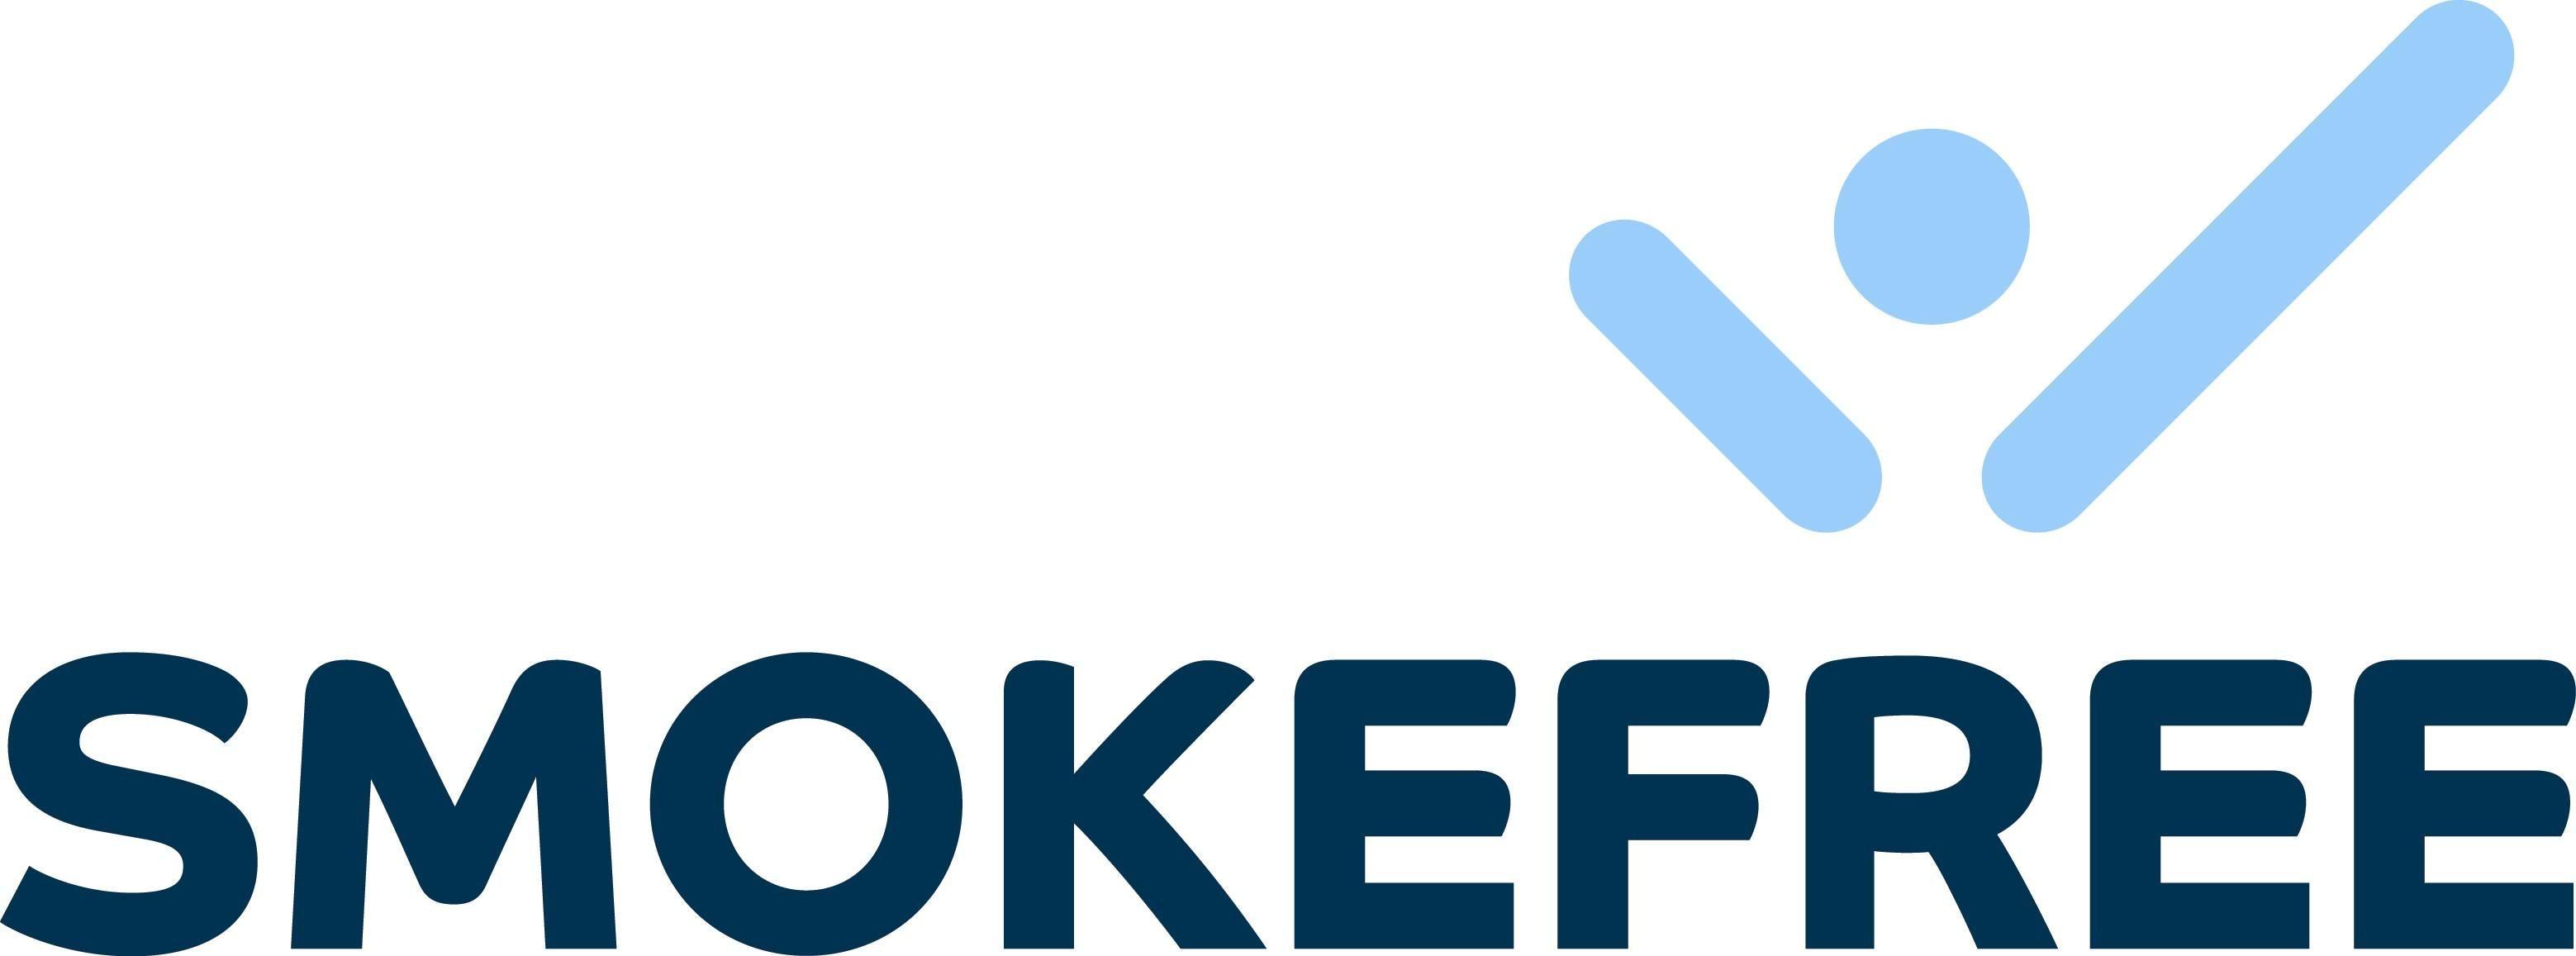 Smoke-Free Logo - Smoke Free MK : Northamptonshire and Milton Keynes LPC